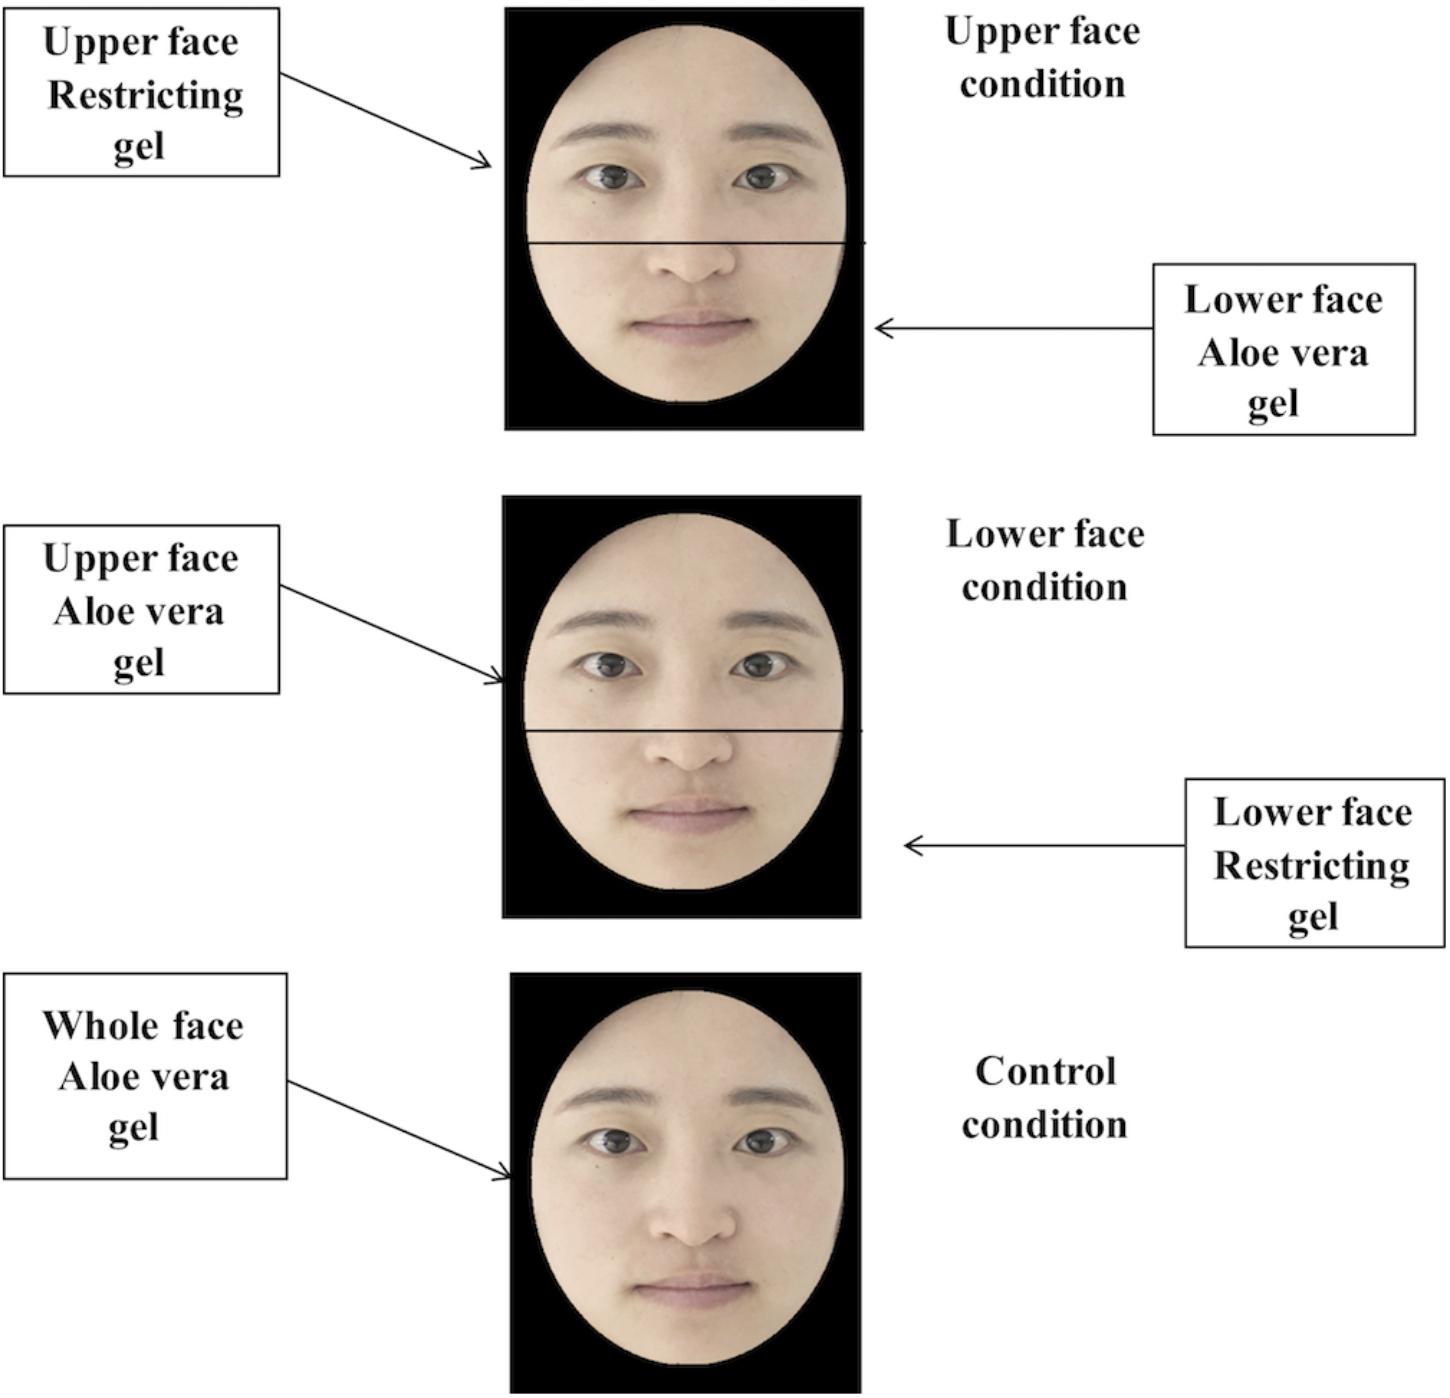 Ekmans facial feedback theory